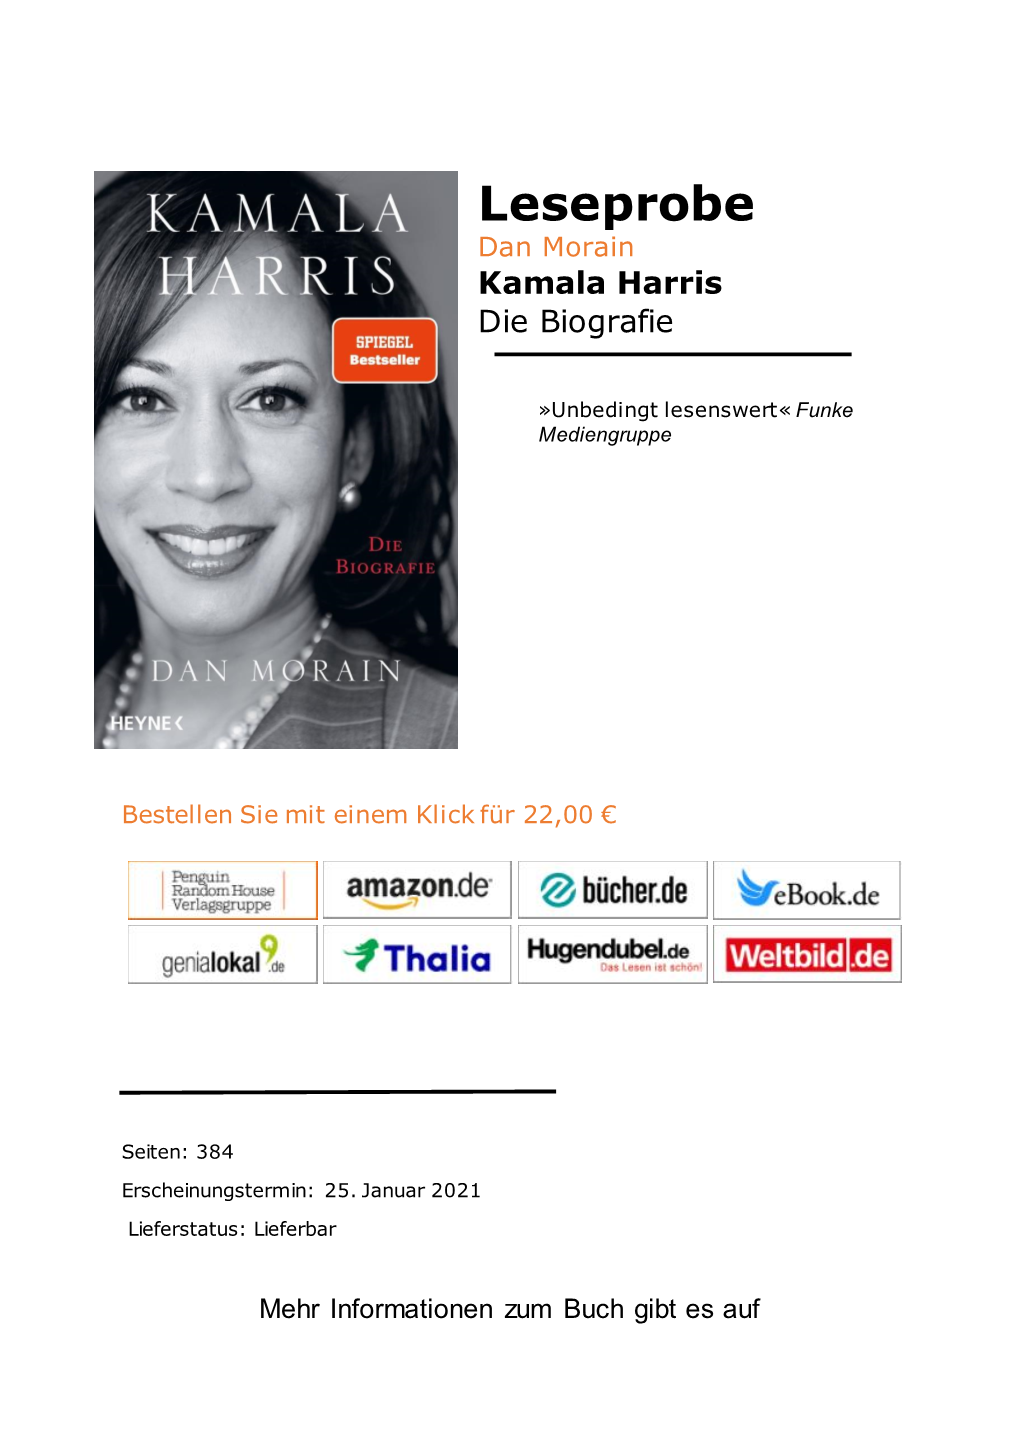 Leseprobe Dan Morain Kamala Harris Die Biografie